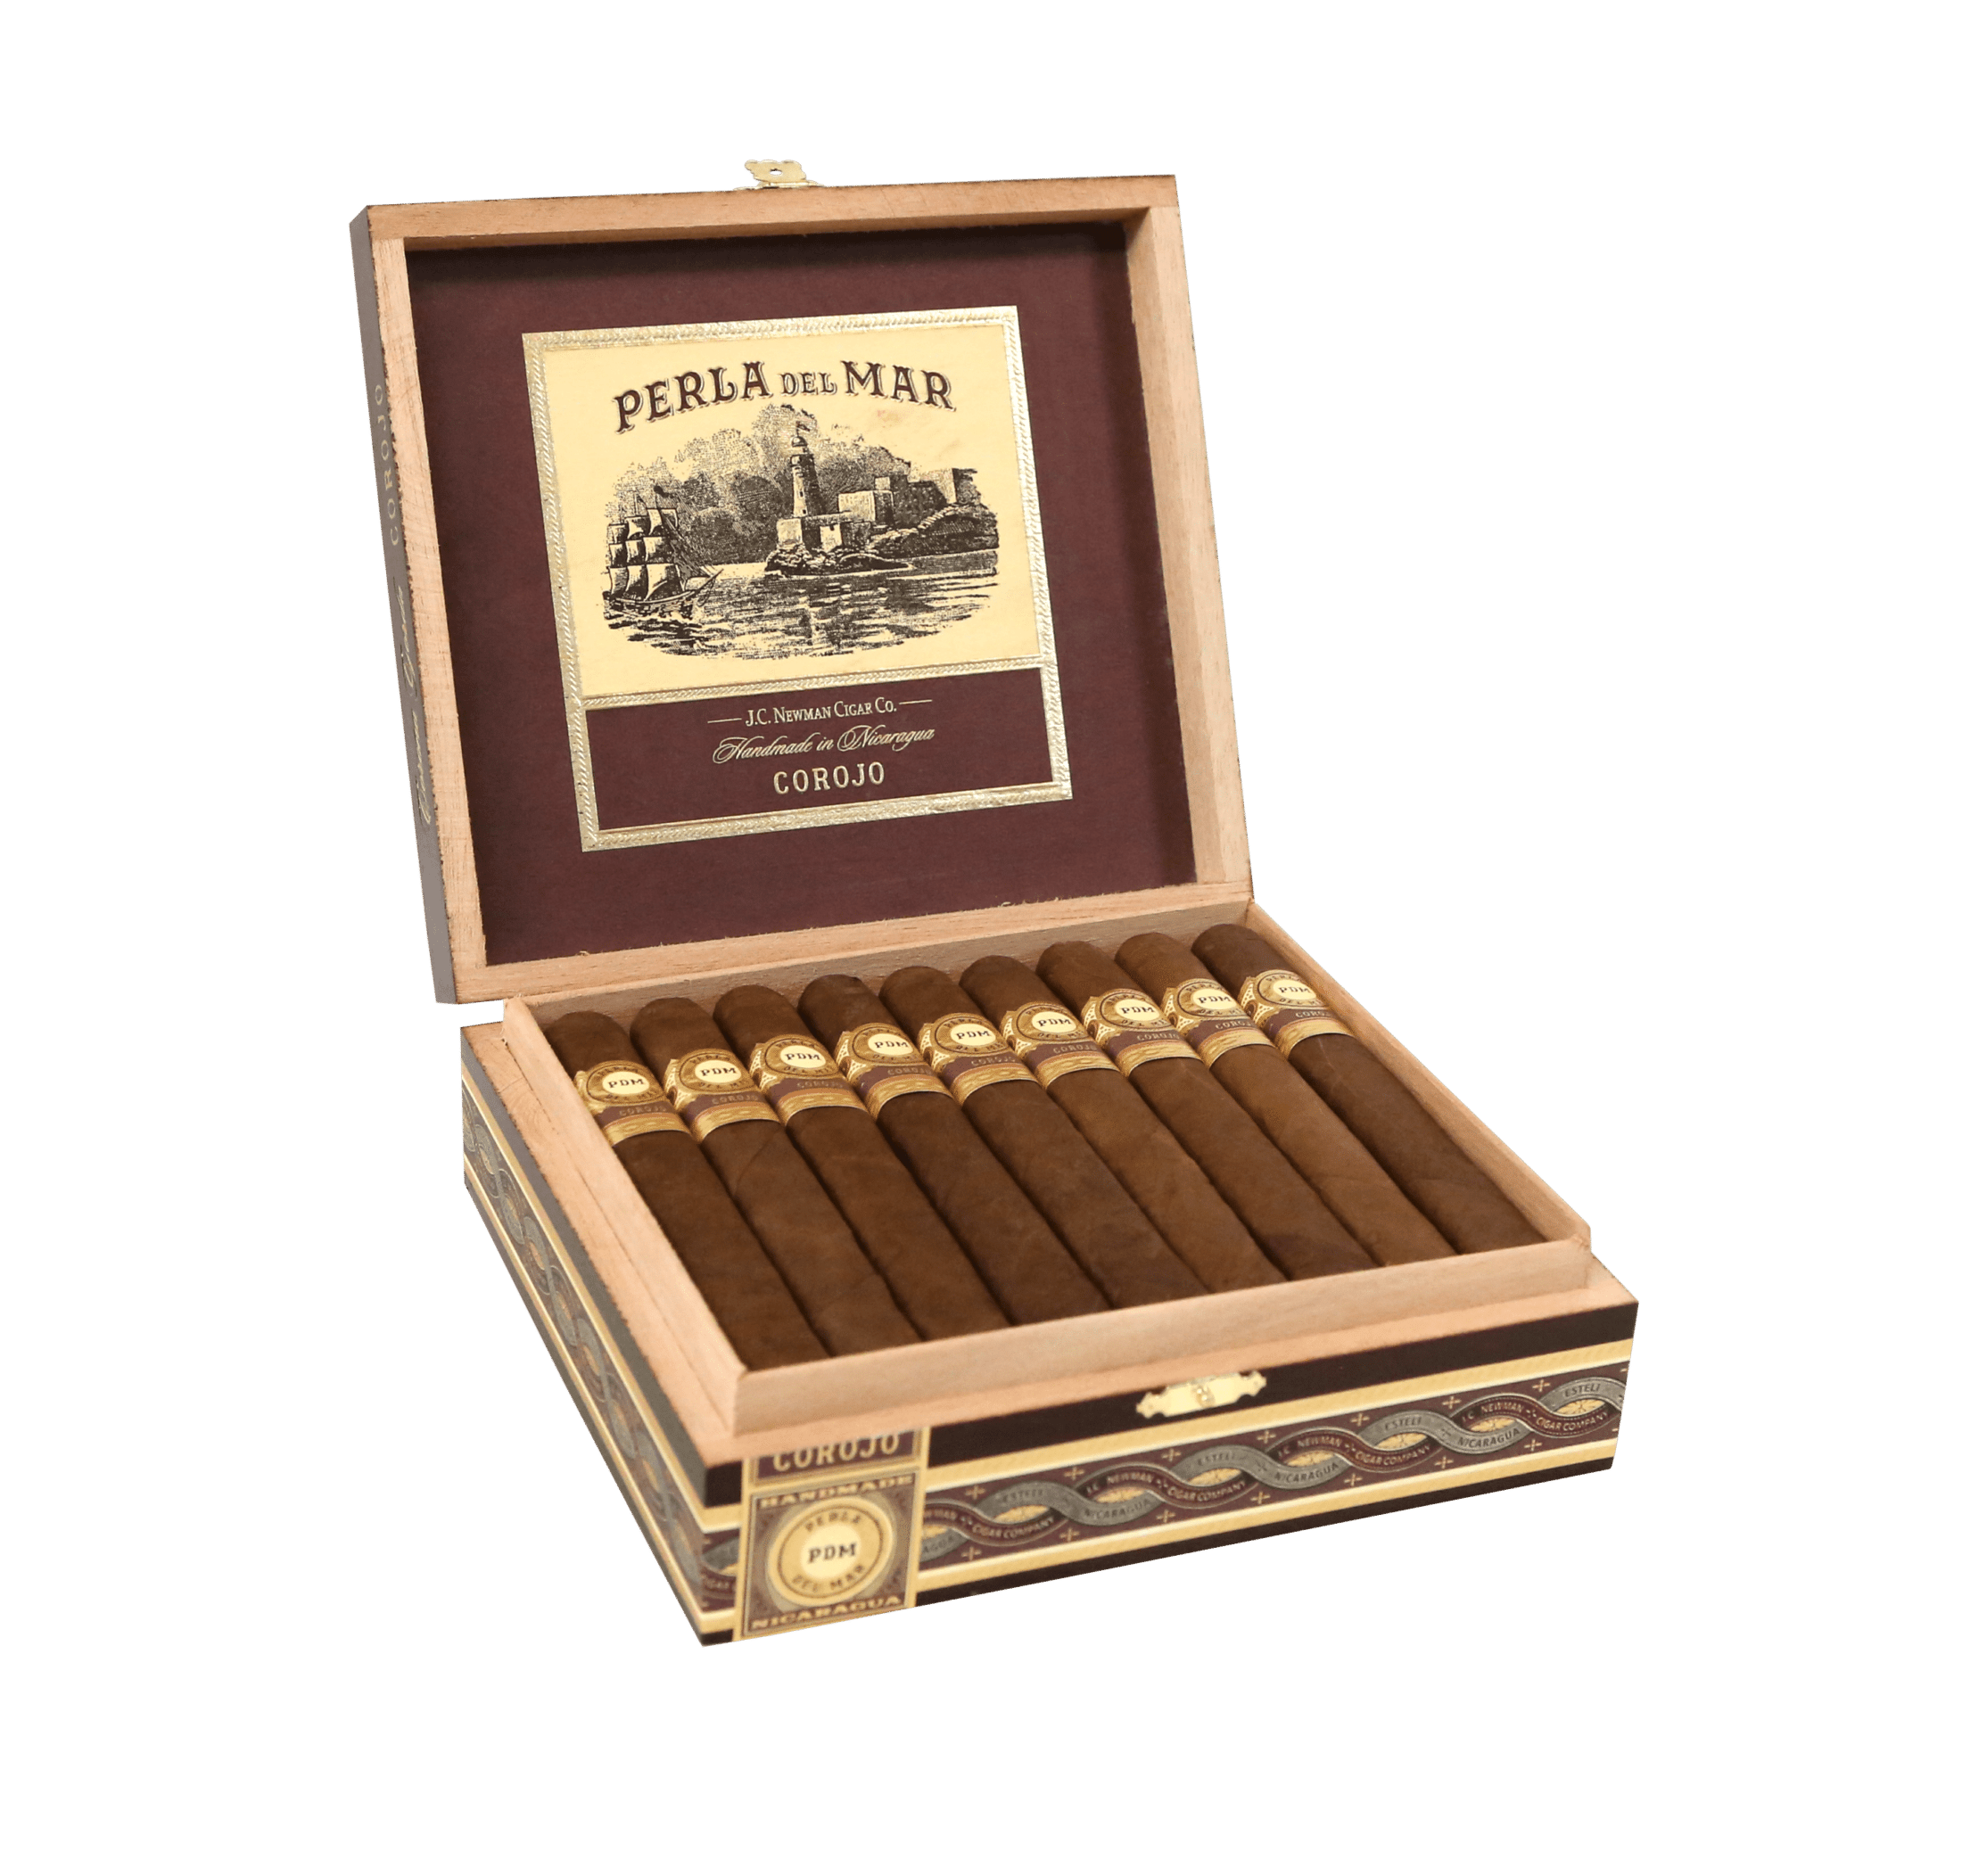 Open box of 25 count Perla Del Mar Corojo Corona Gorda cigars